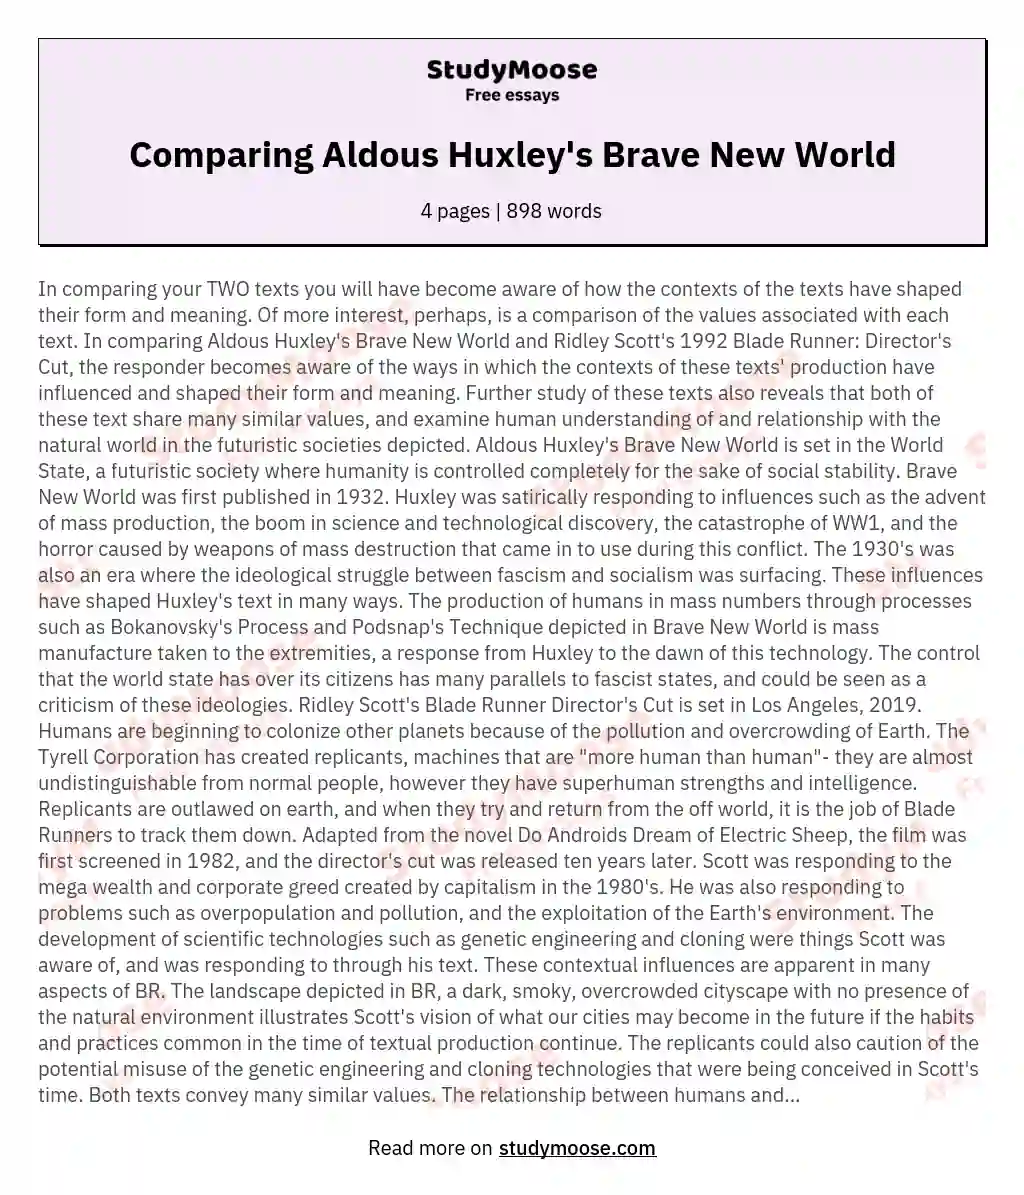 Comparing Aldous Huxley's Brave New World